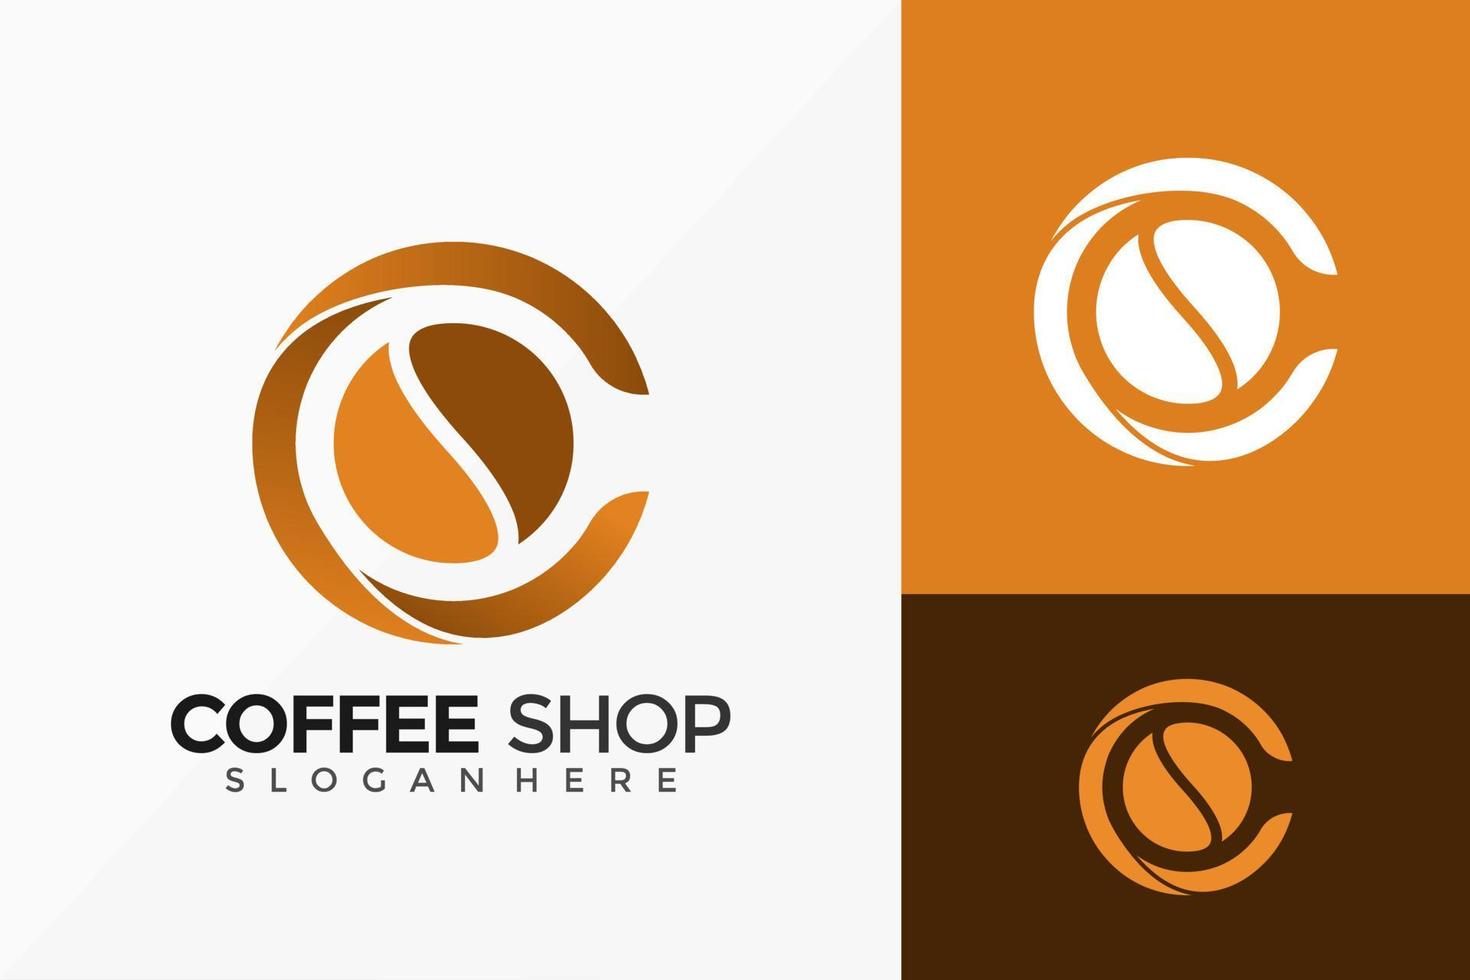 Letter C Coffee Shop Logo Design. Modern Idea logos designs Vector illustration template